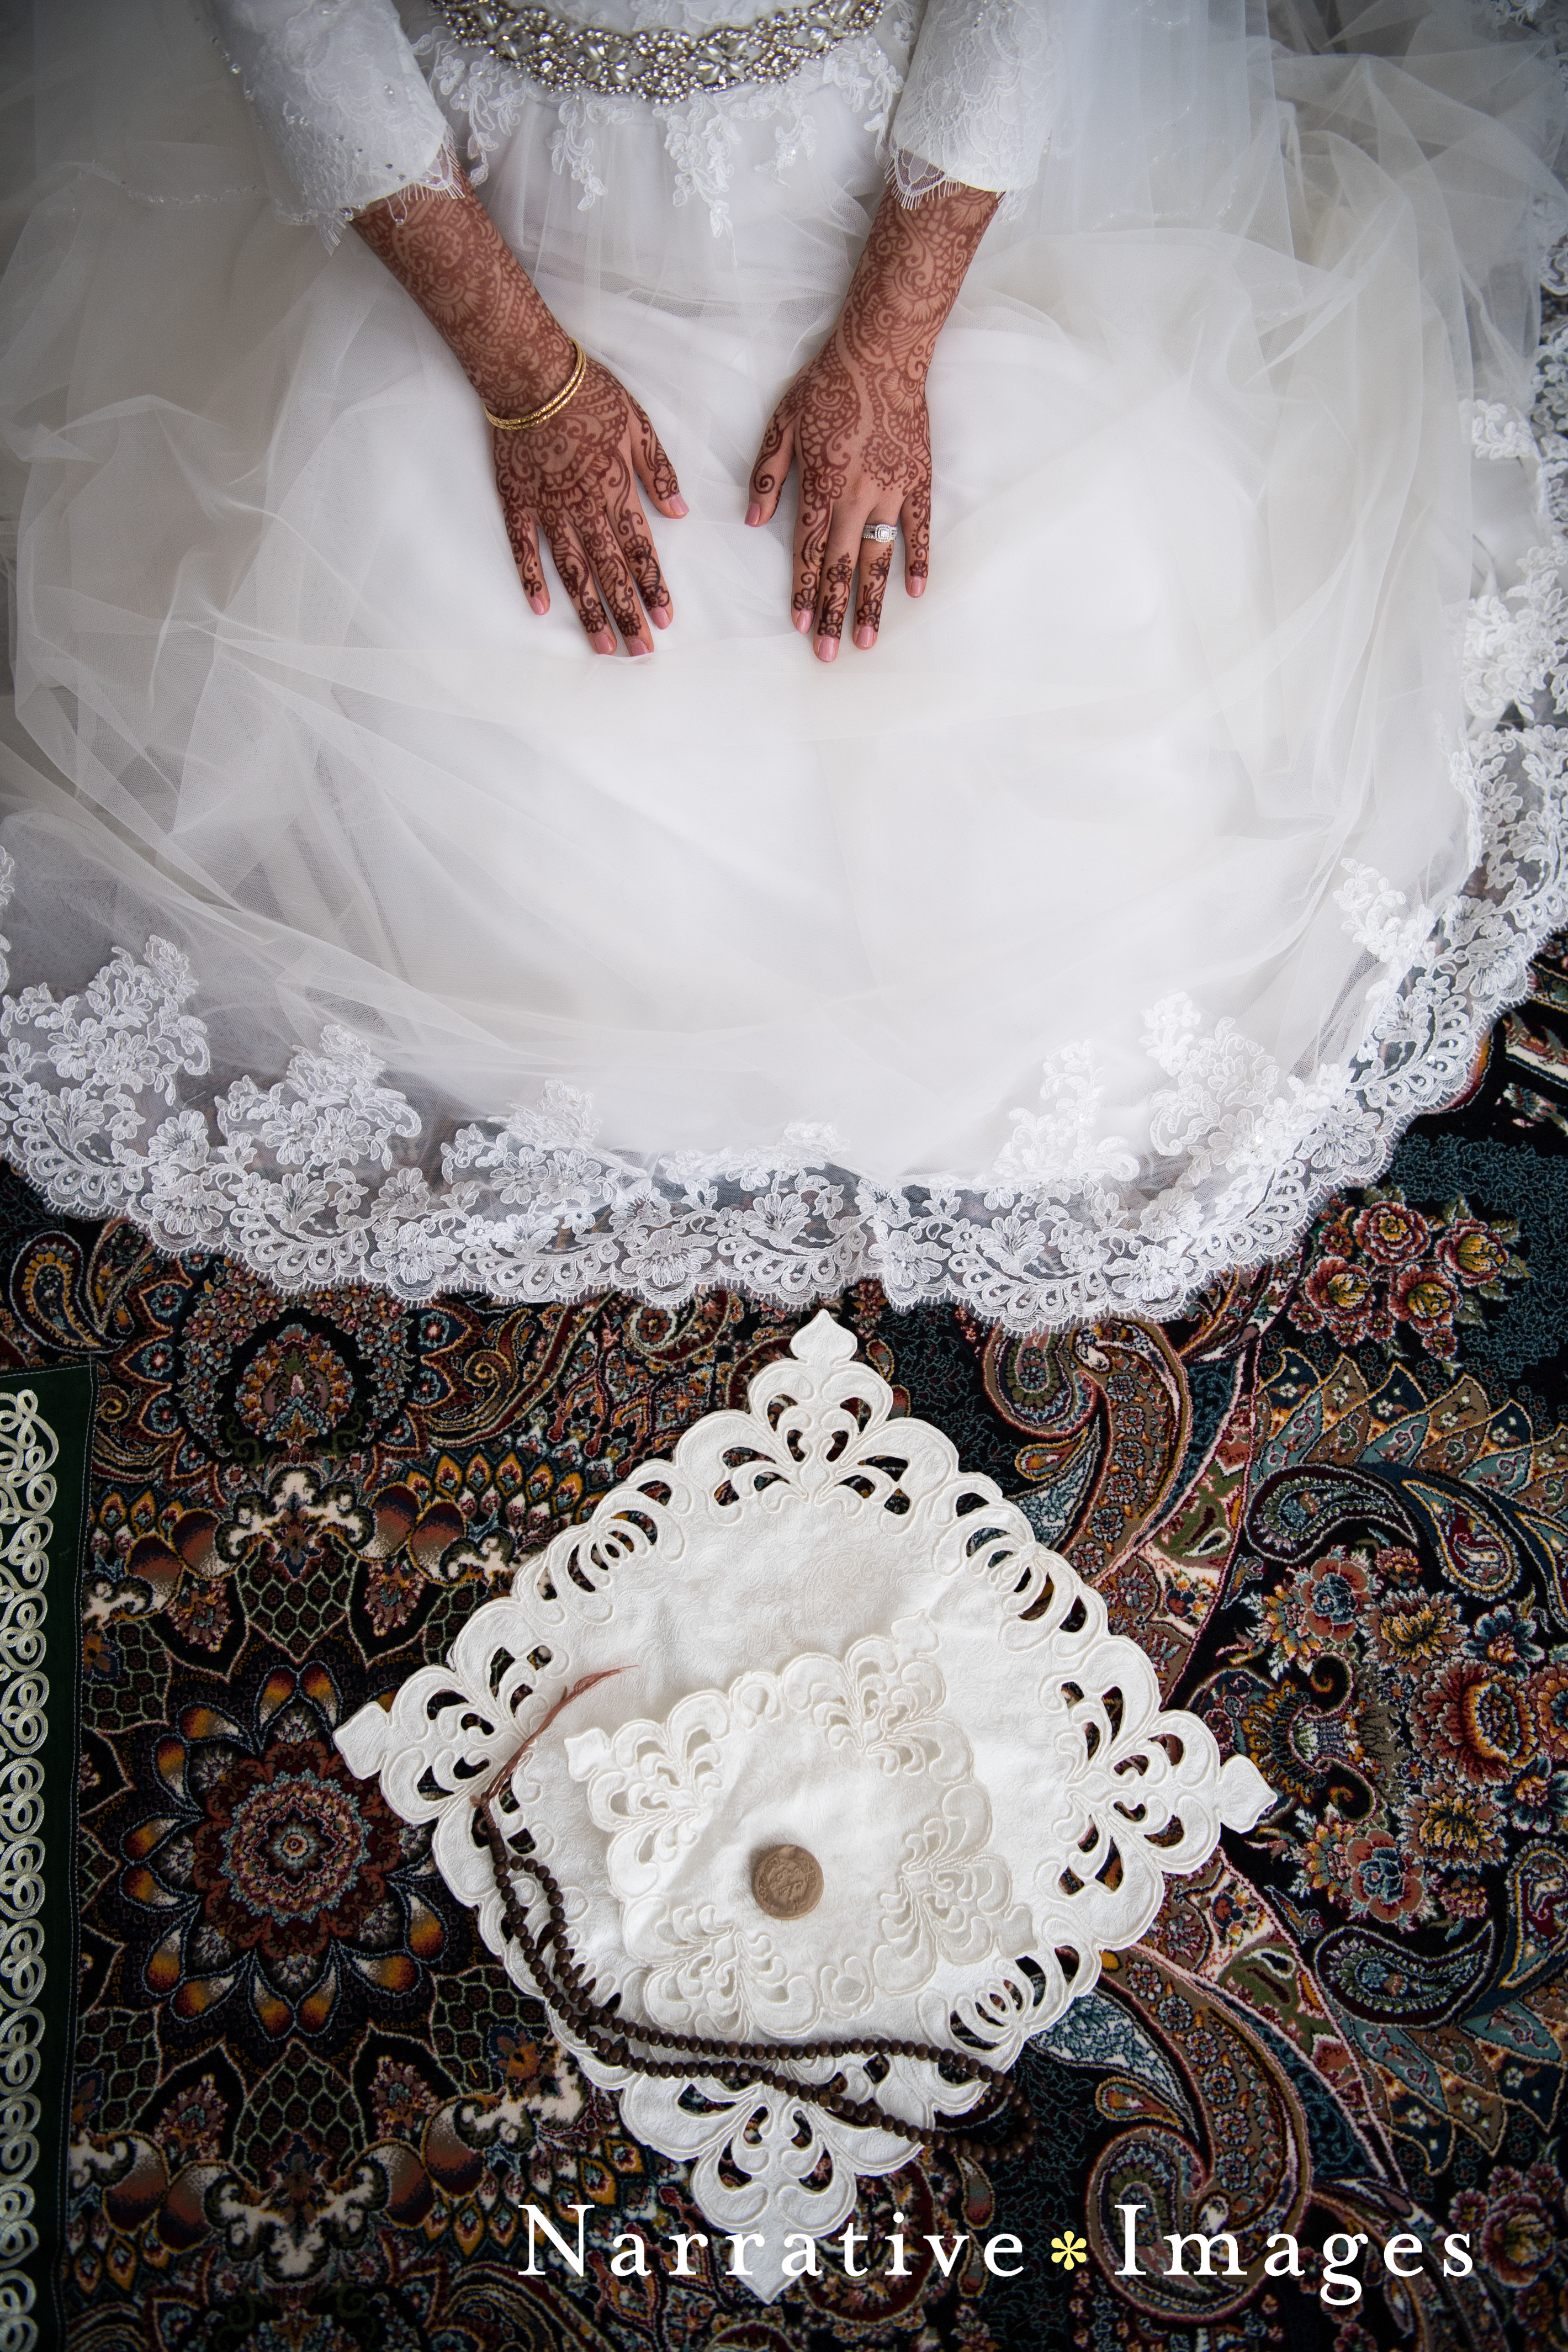 Afghan bride prays before the wedding